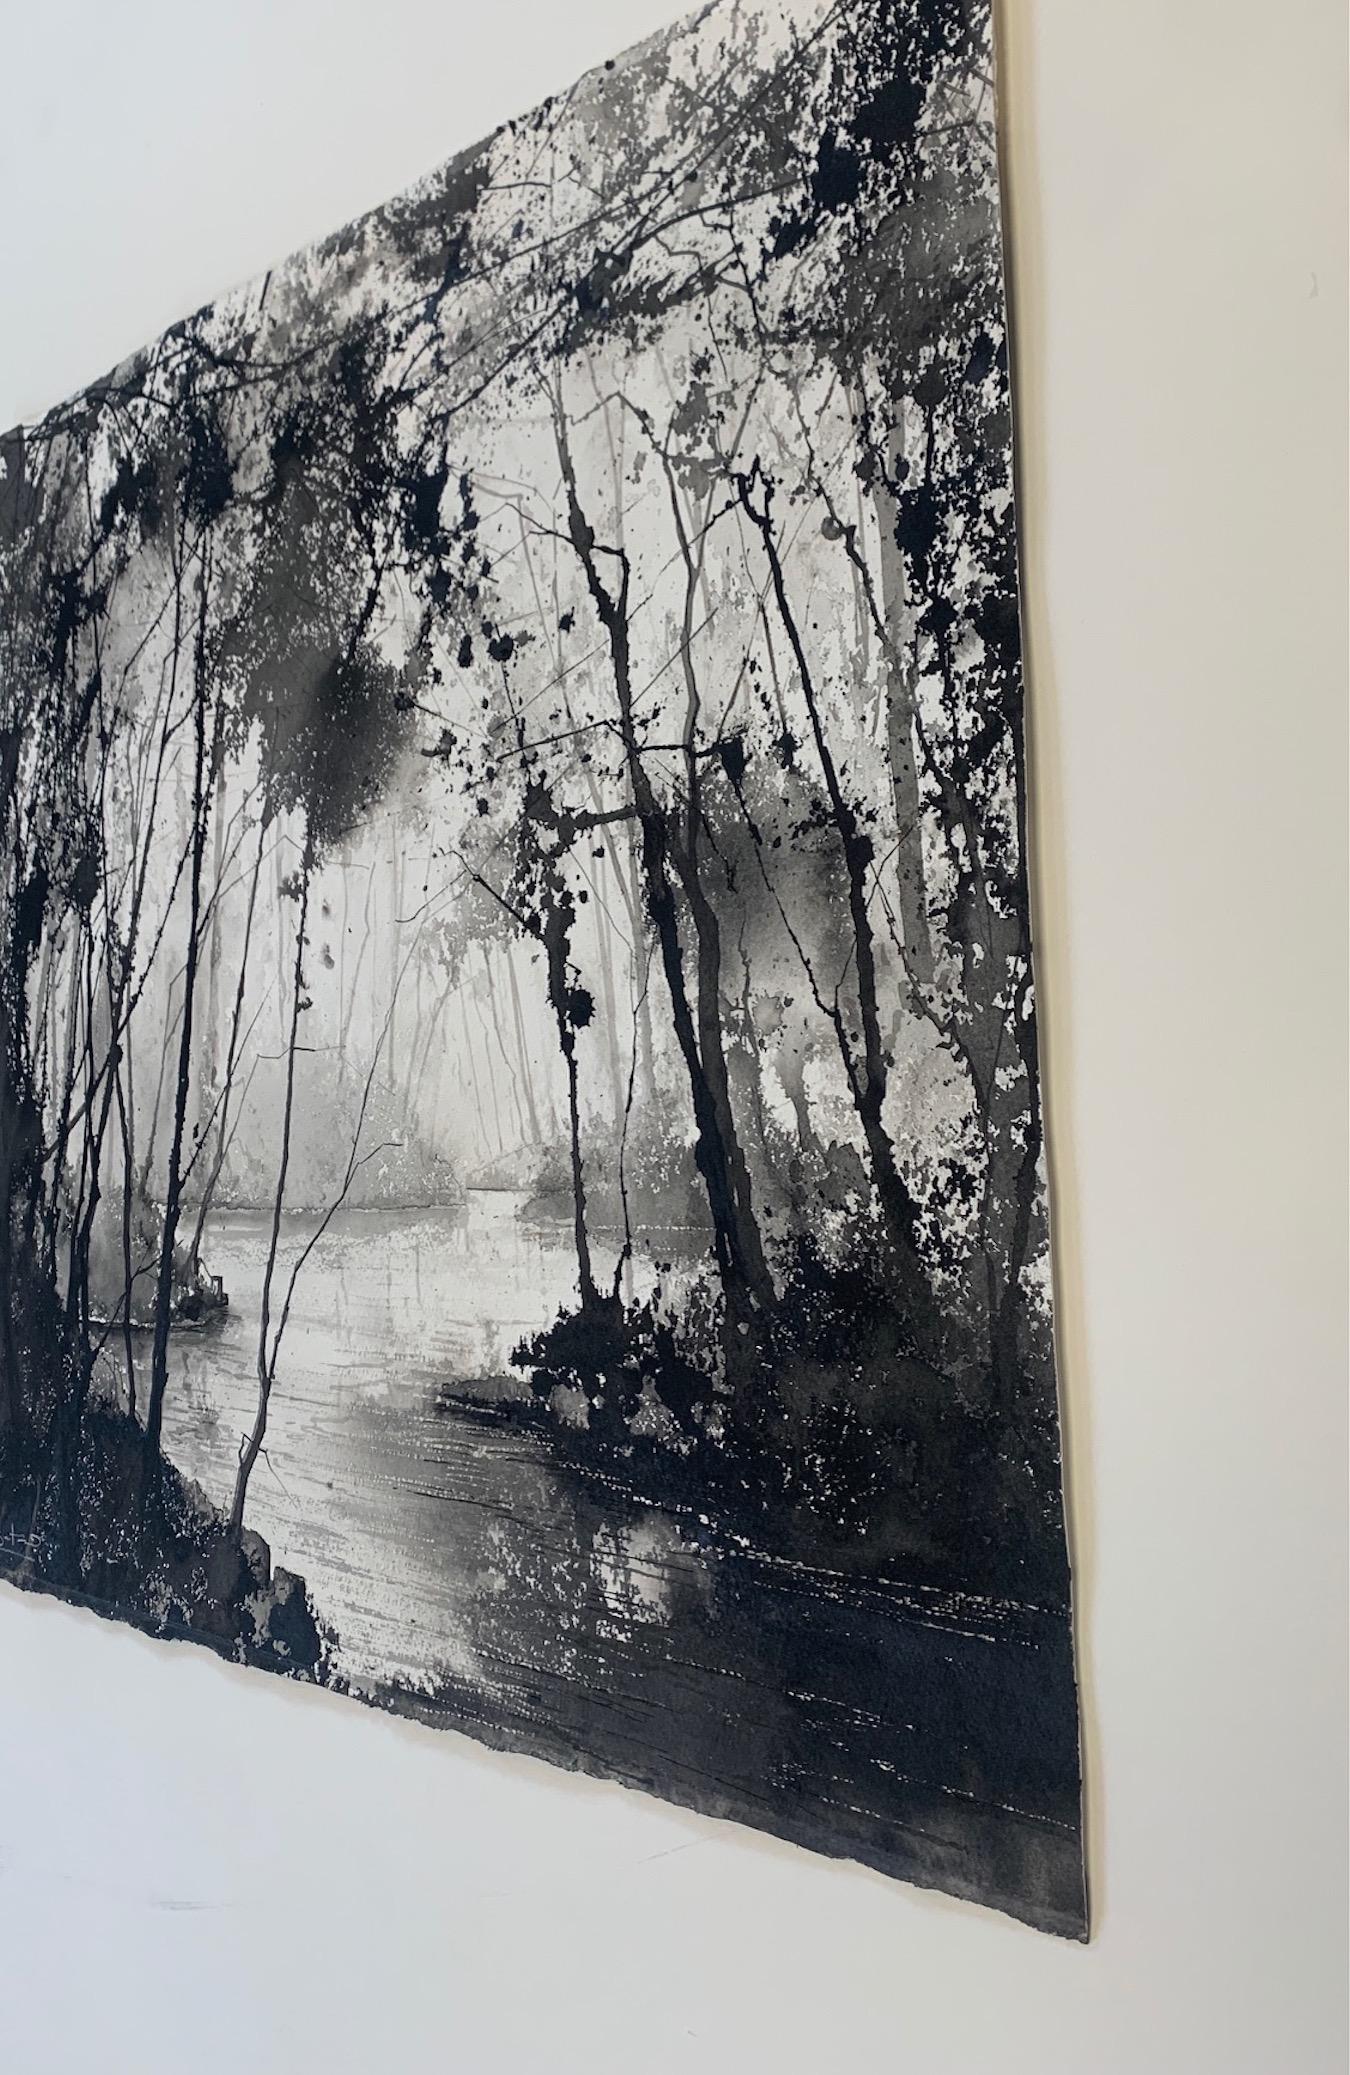 River Dart, James Bonstow, Originalgemälde, Baumkunst, Monochrome Kunst (Grau), Abstract Drawing, von James Bonstow 